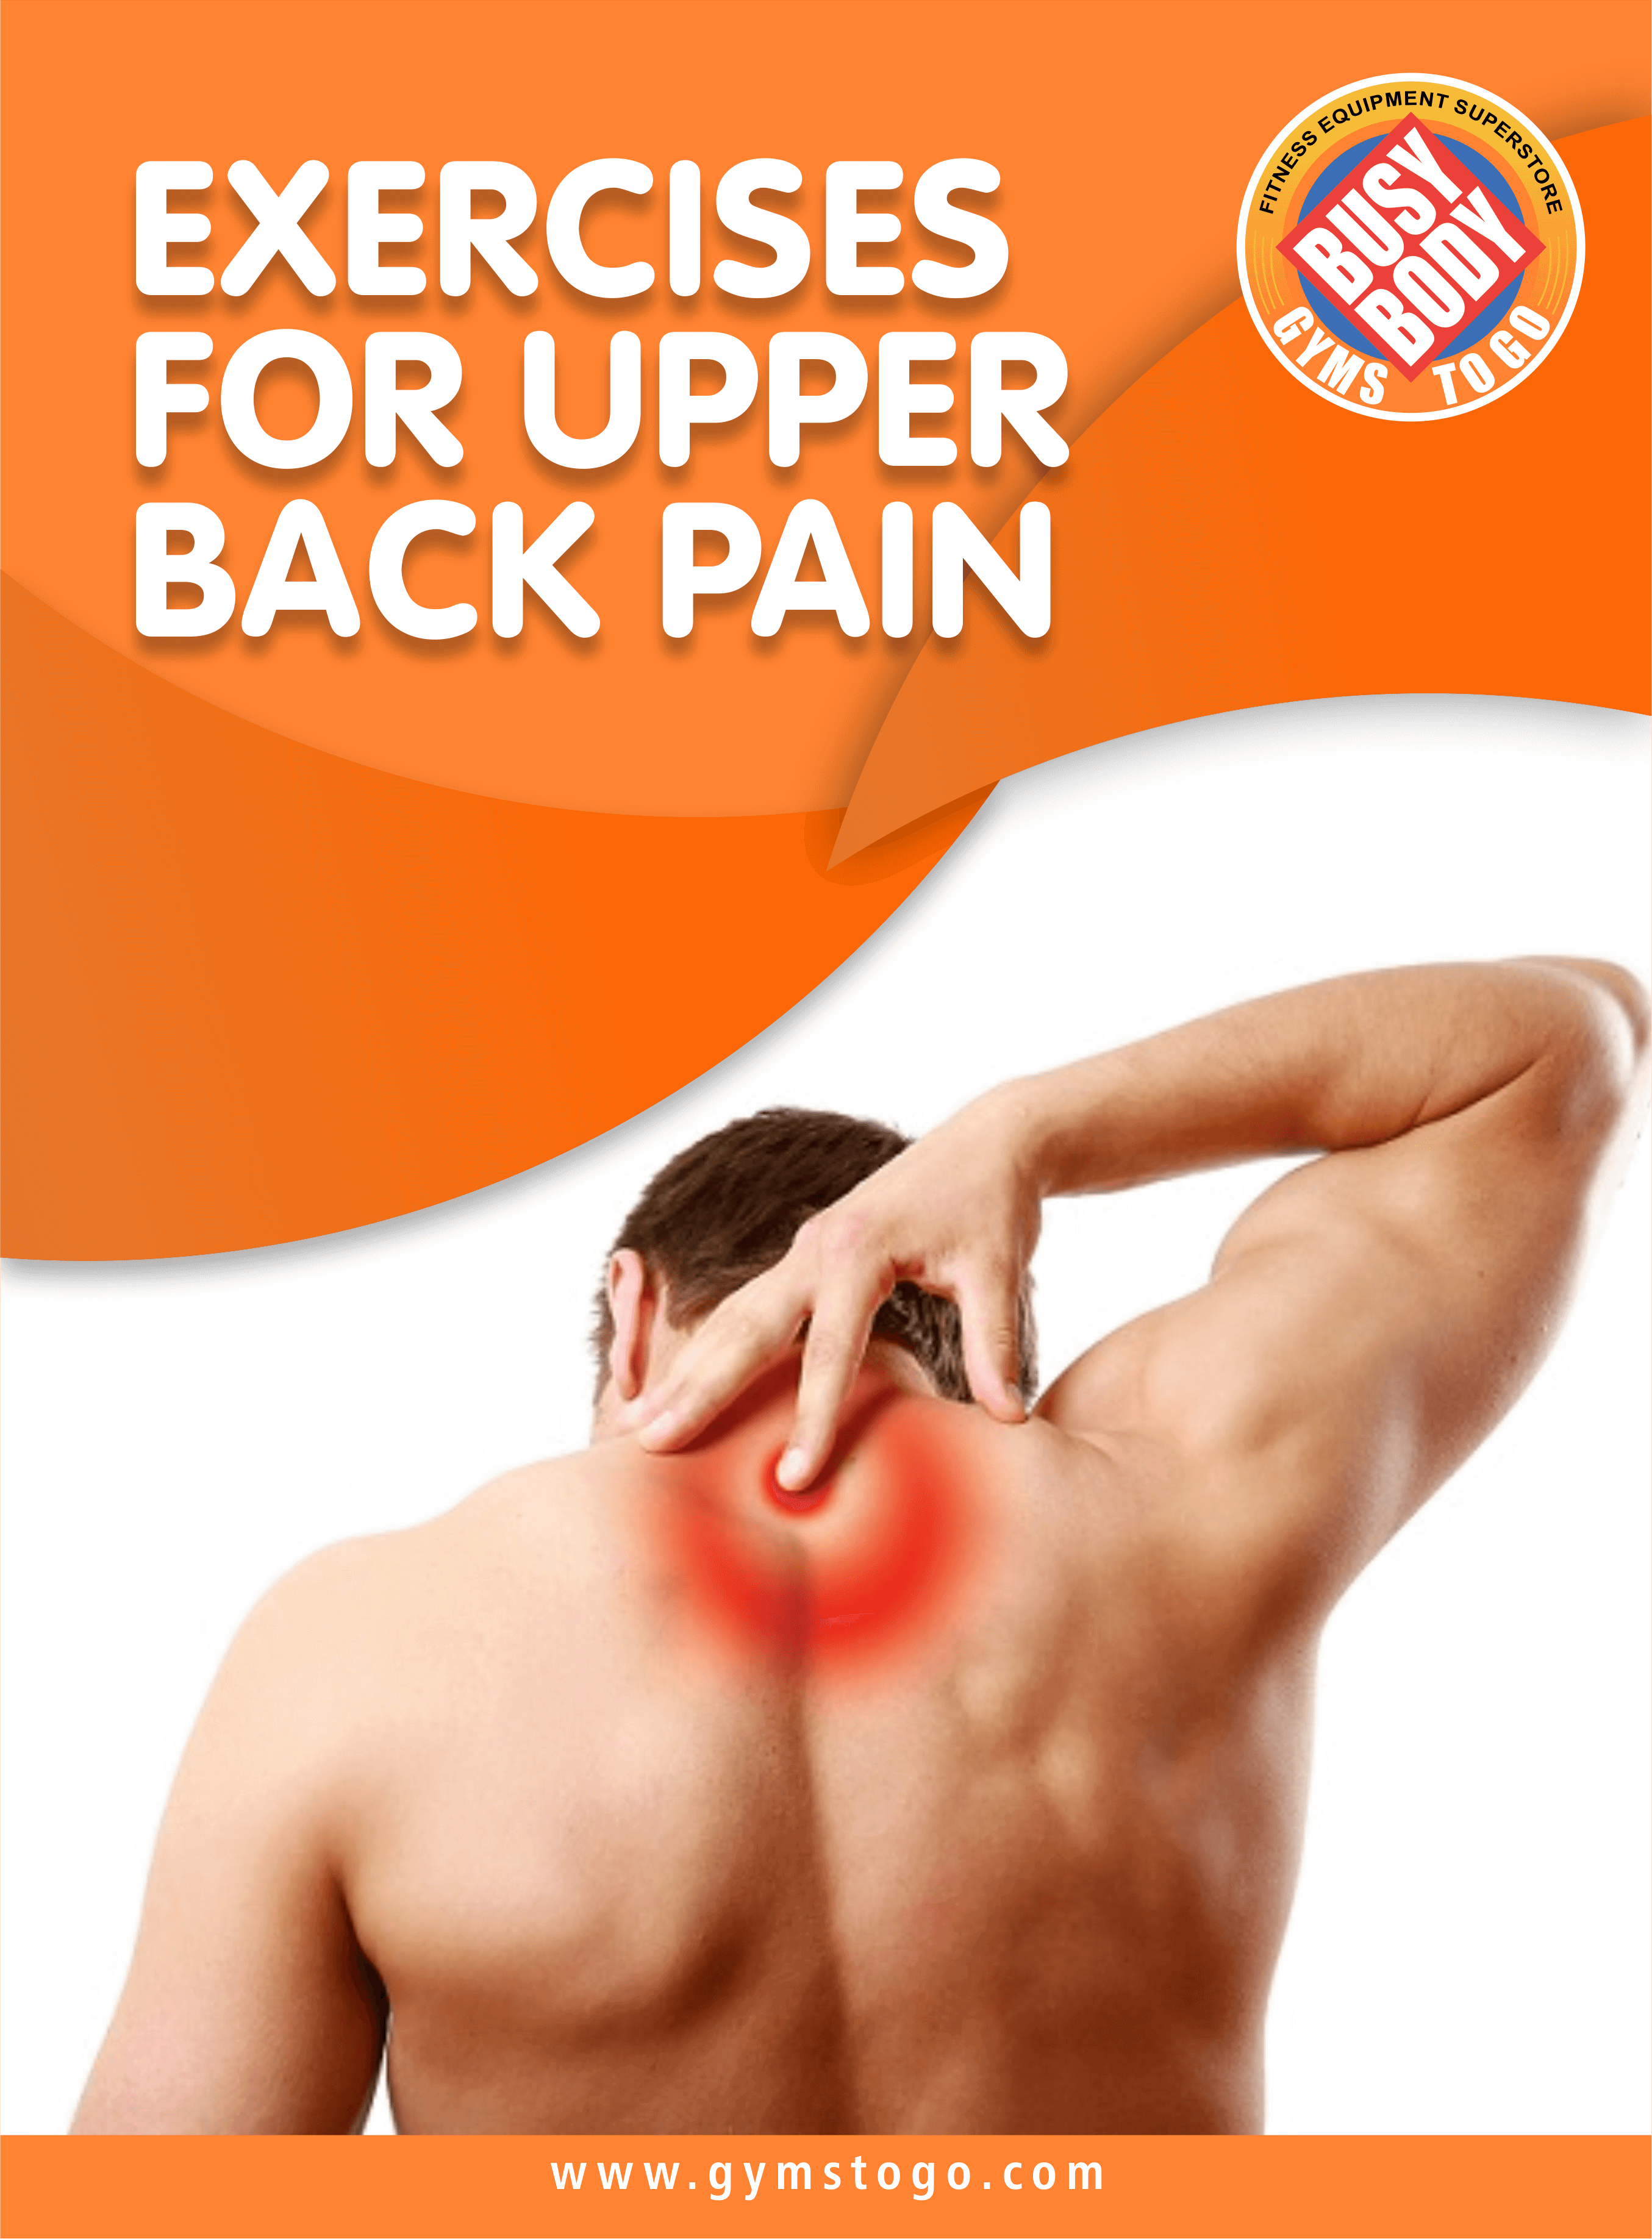 https://www.gymstogo.com/wp-content/uploads/2021/07/exercises-for-upper-back-pain.png